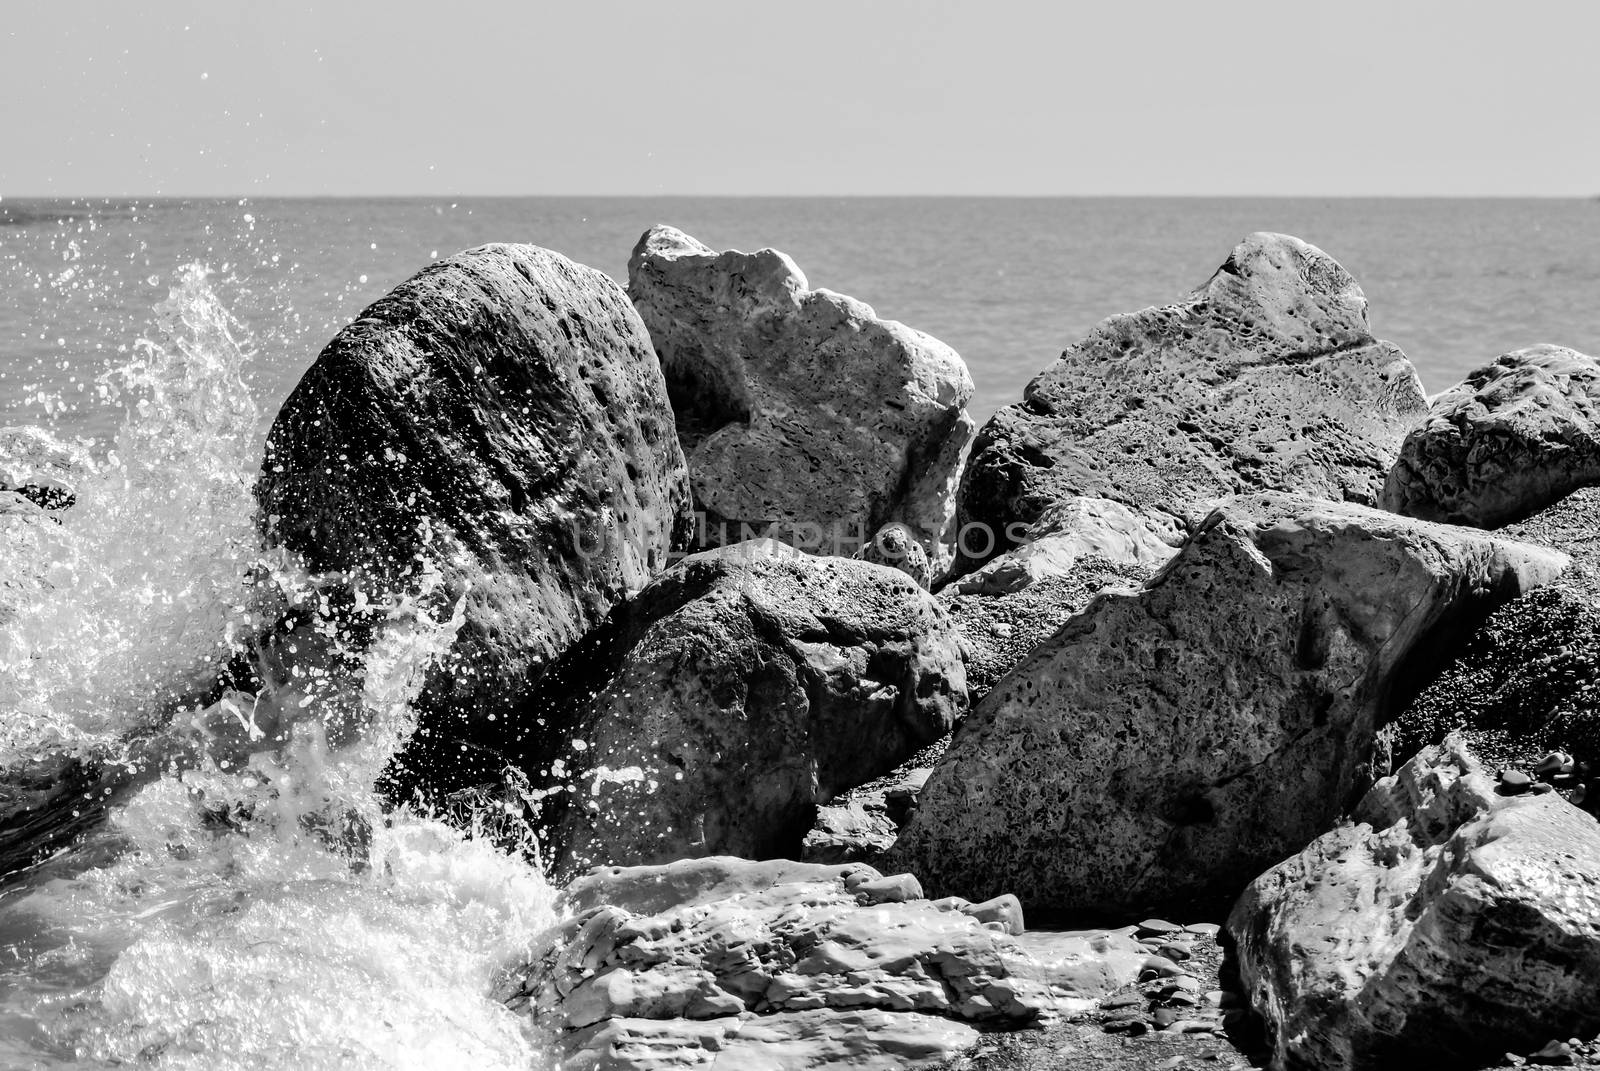 Wave on a cliff by rarrarorro